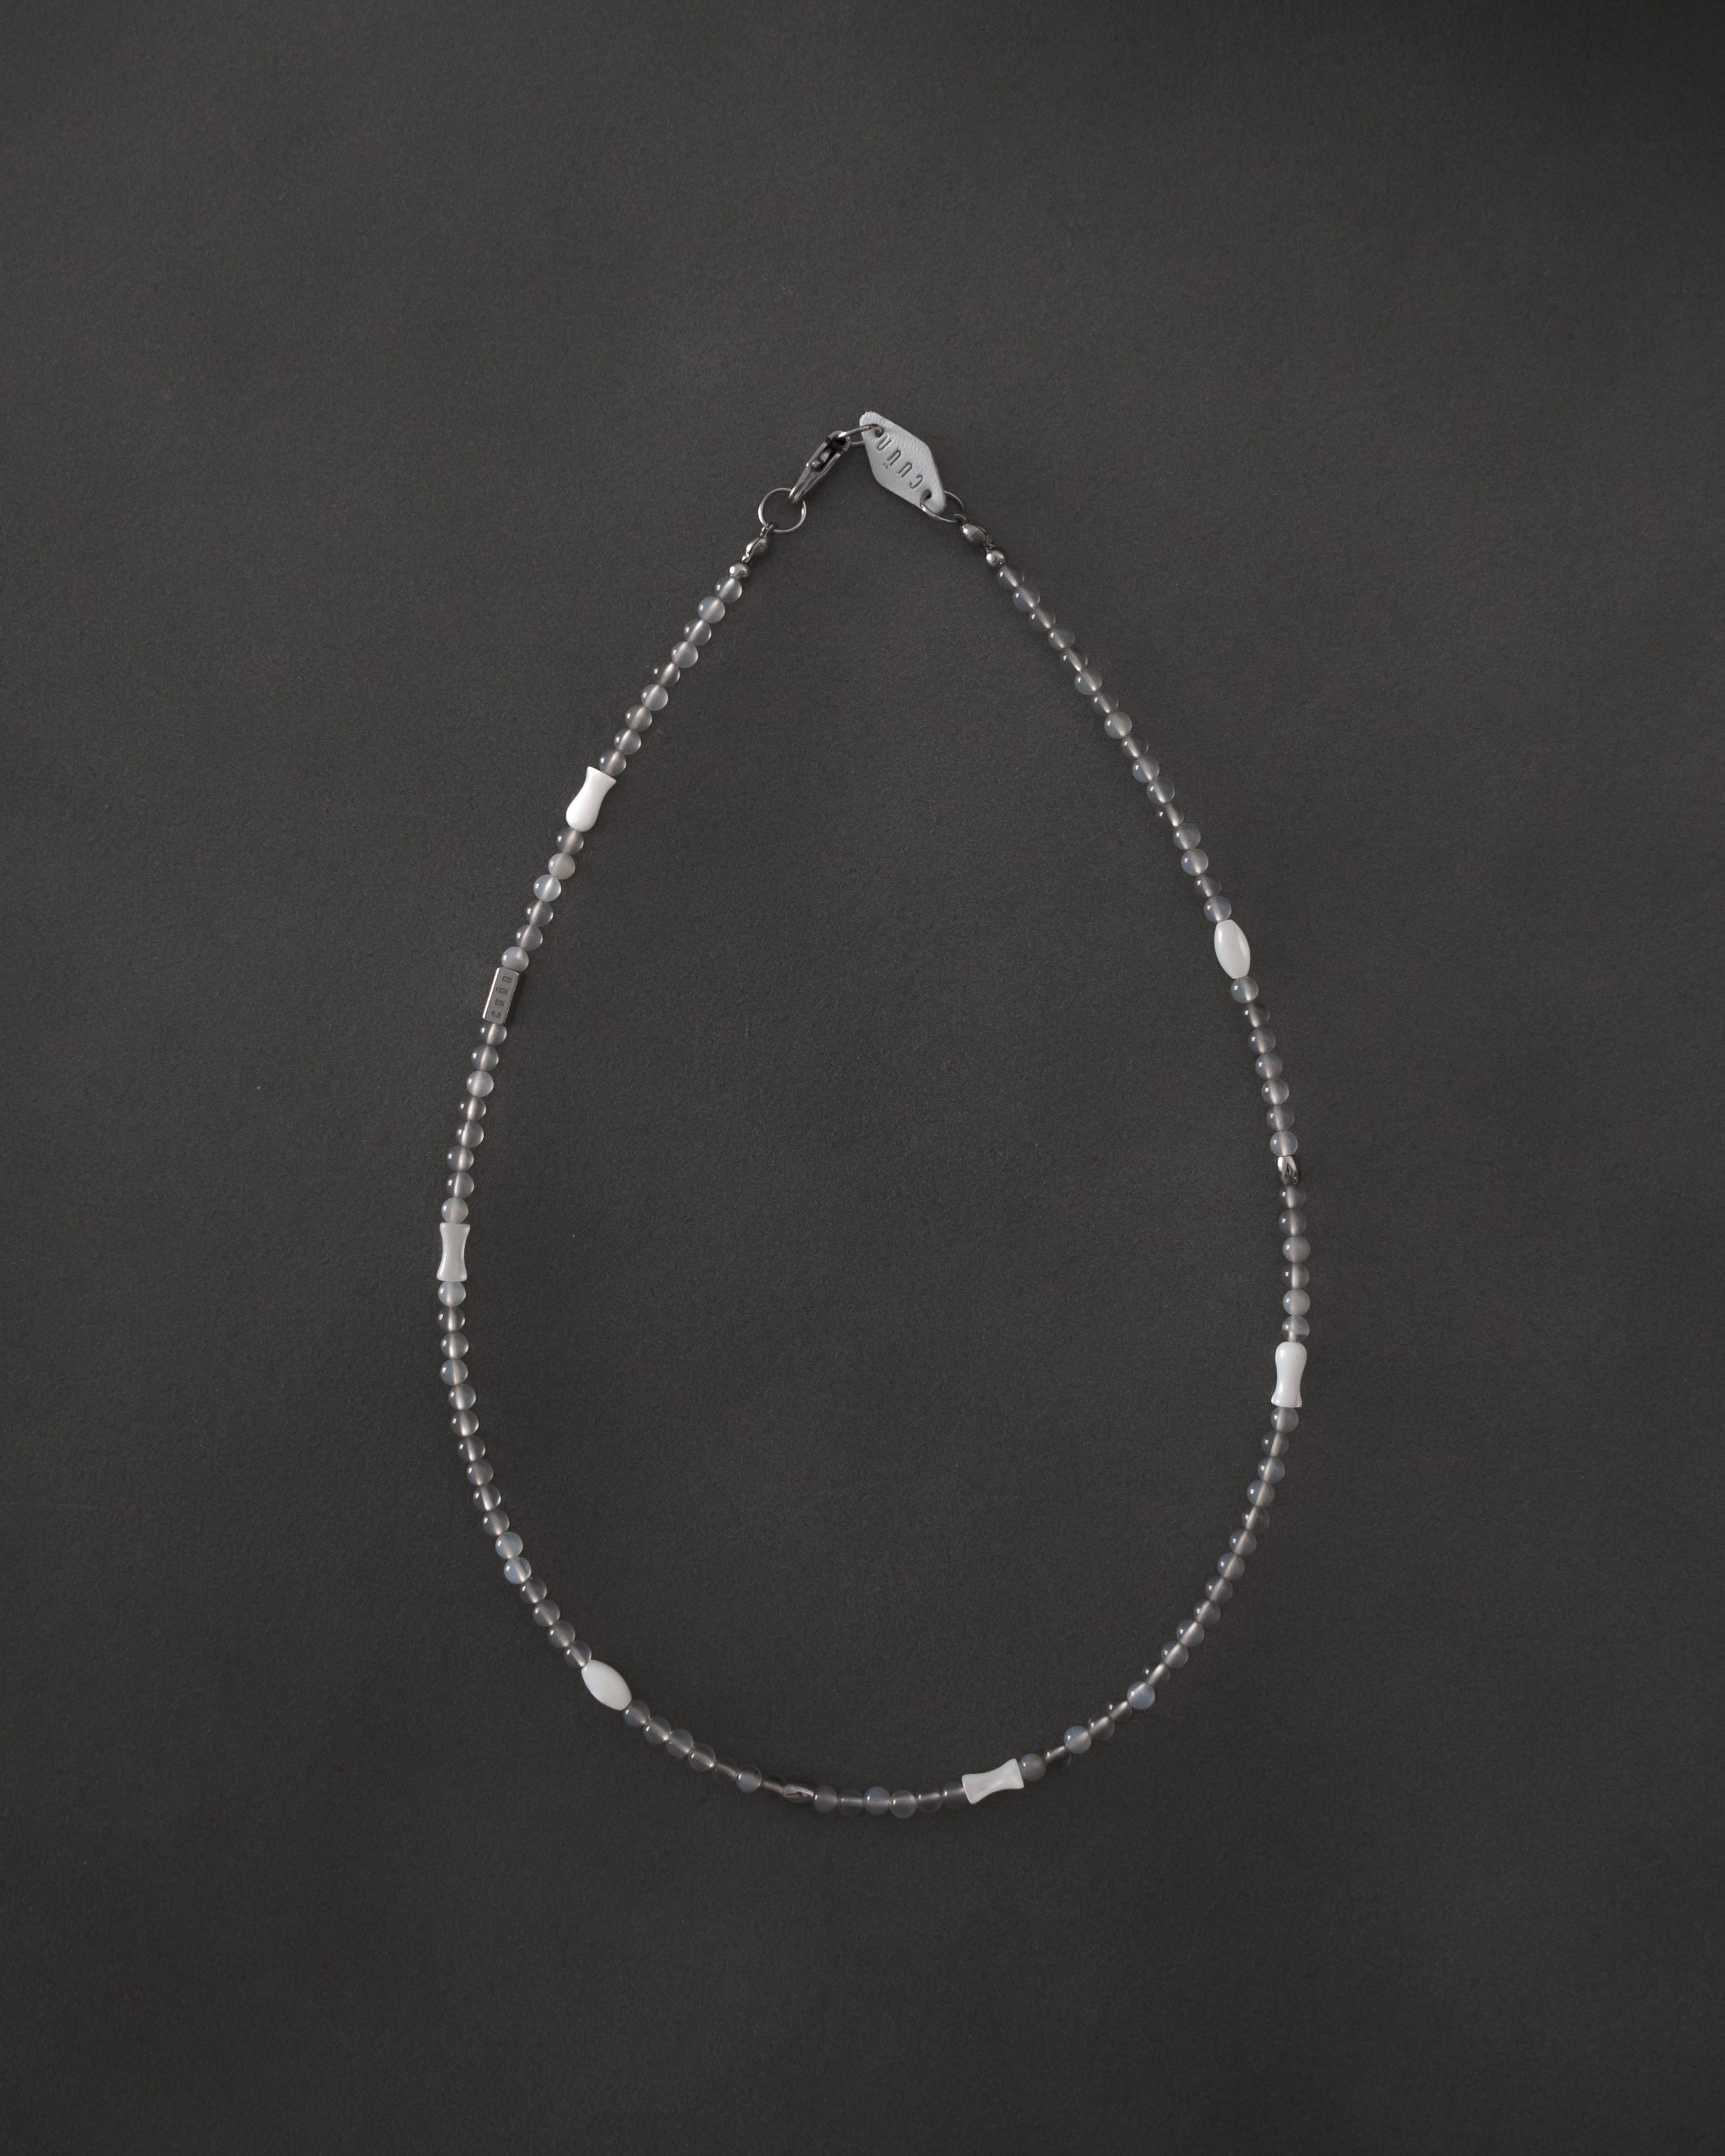 Haiiro Gray Agate Beaded Necklace